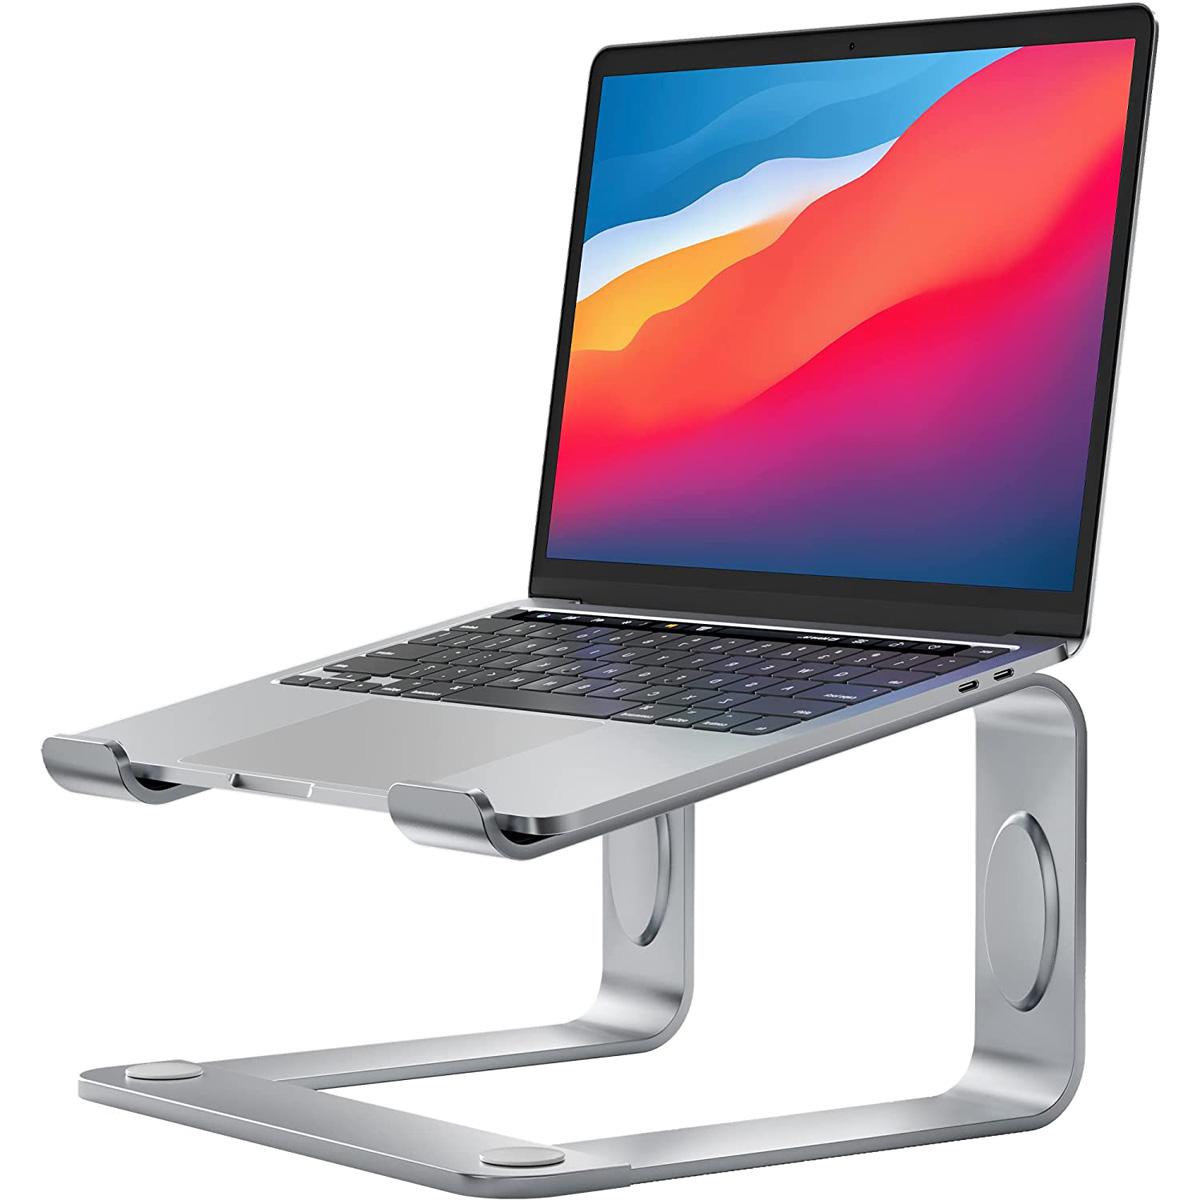 Loryergo Ergonomic Laptop Stand for $13.99 Shipped